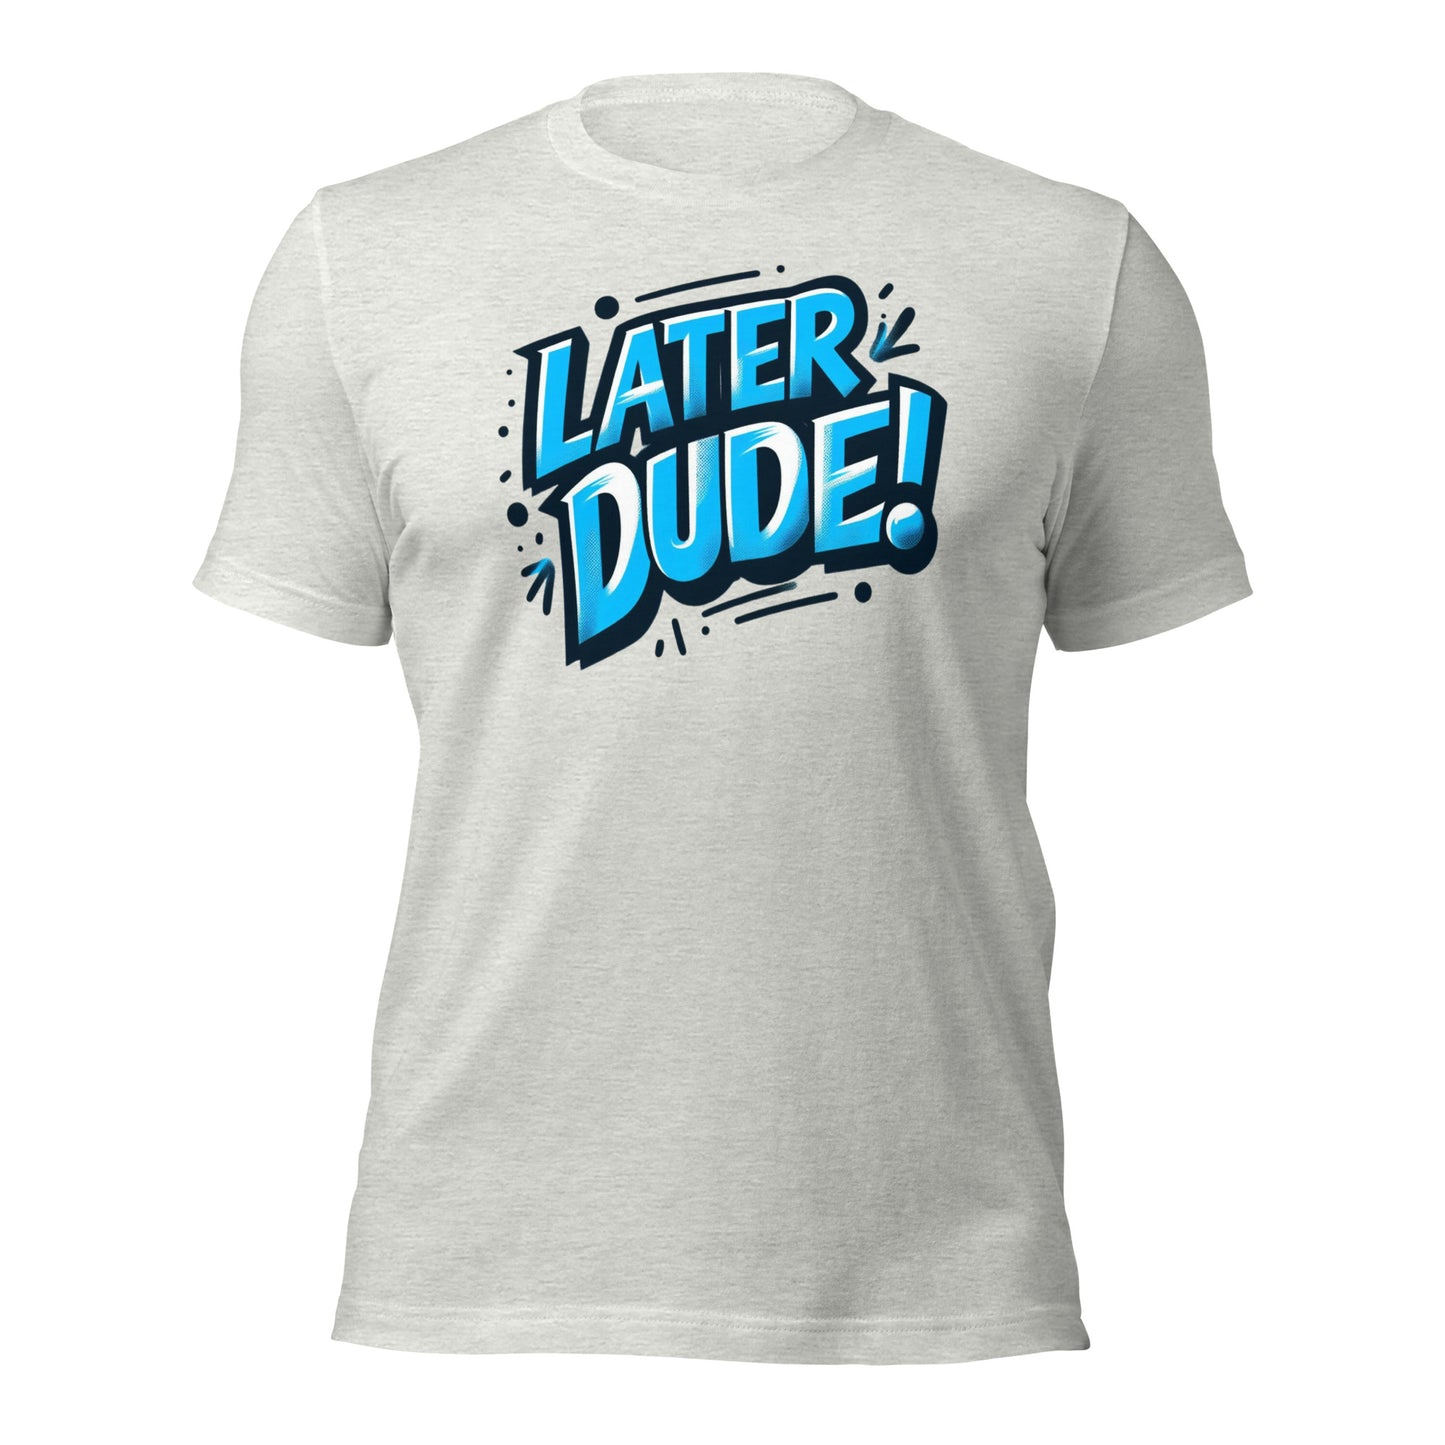 Later Dude Unisex T-Shirt